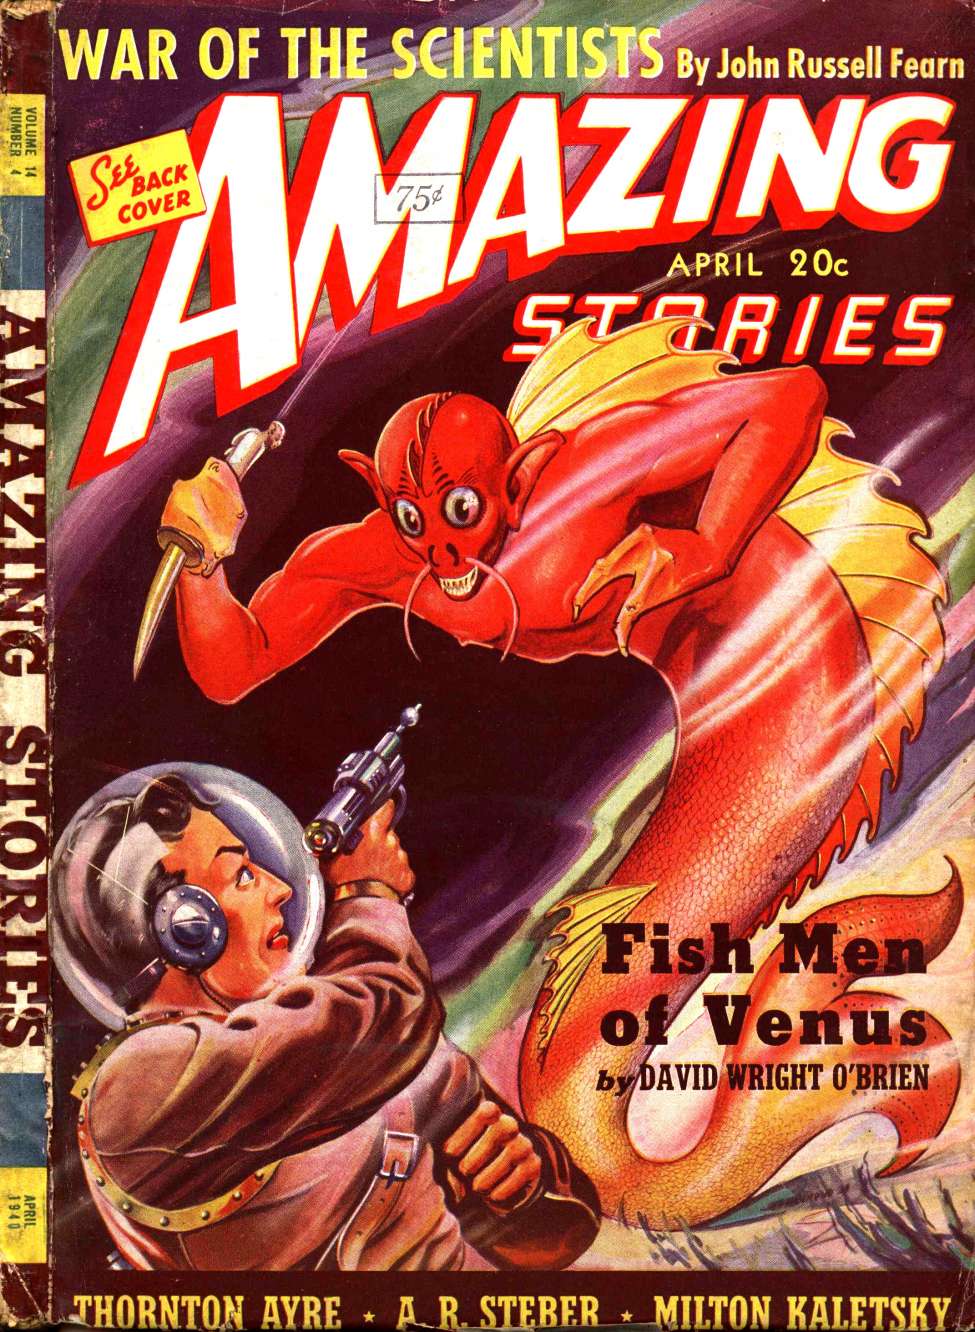 Book Cover For Amazing Stories v14 4 - Fish Men of Venus - David Wright O'Brien